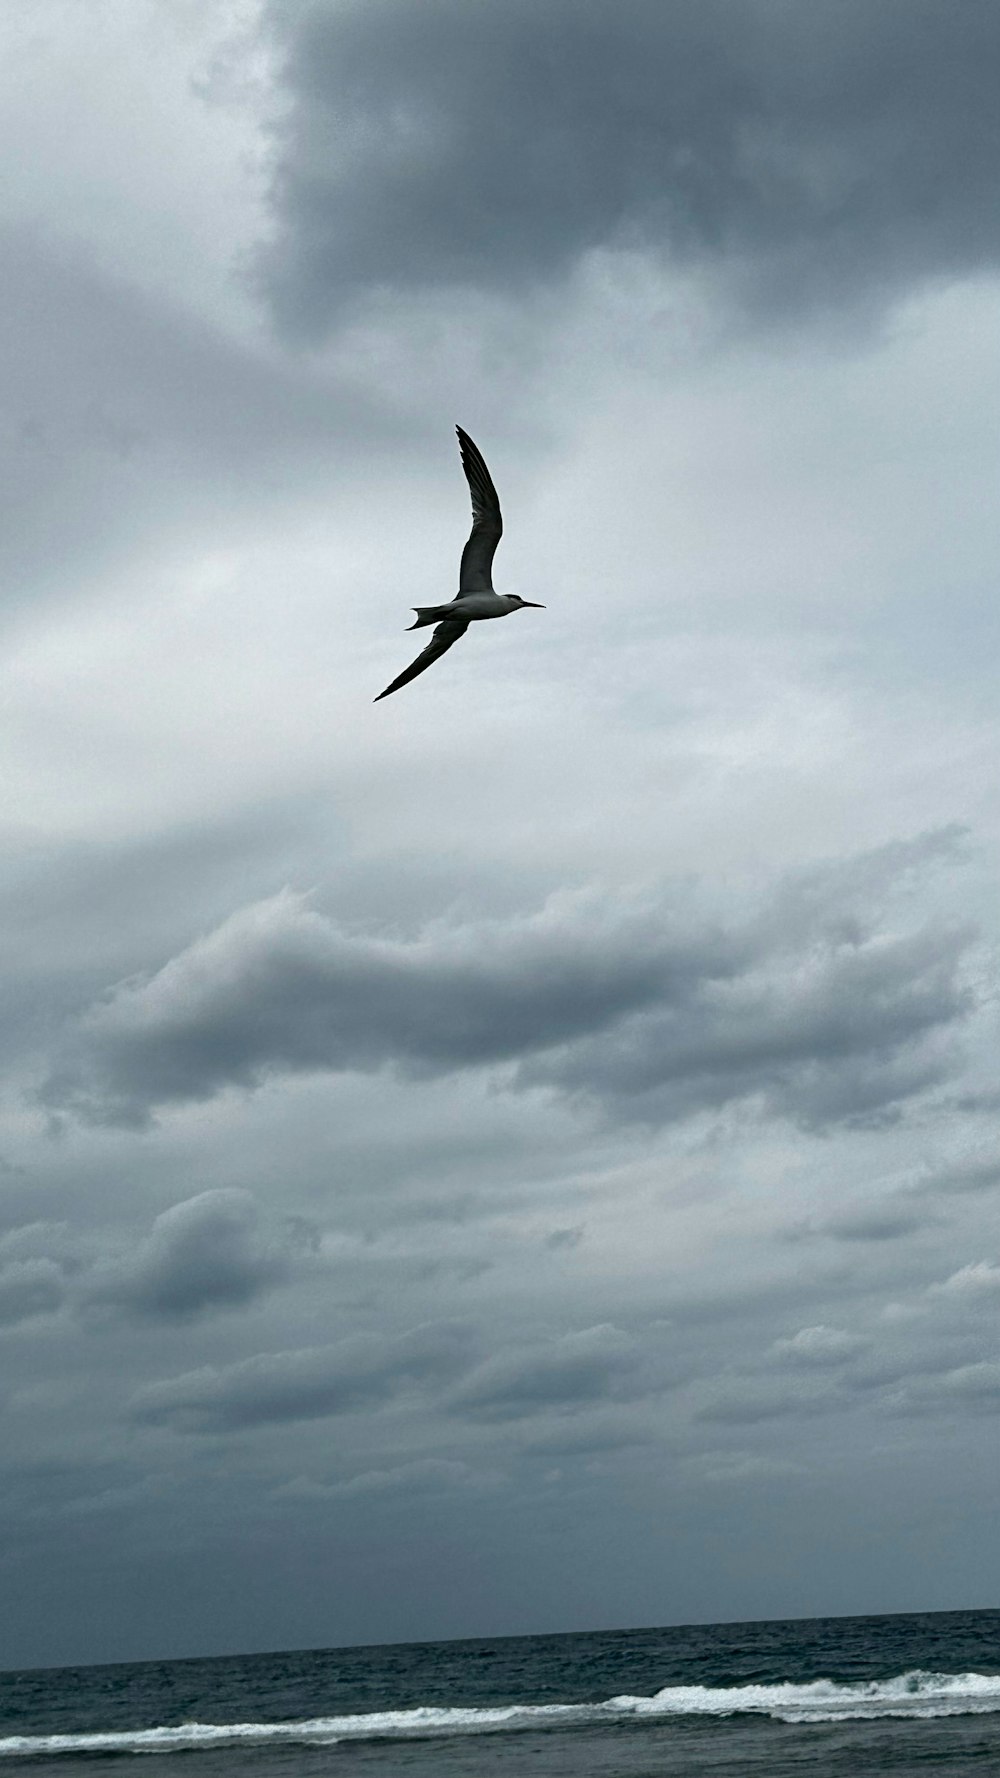 a bird flying over the ocean under a cloudy sky